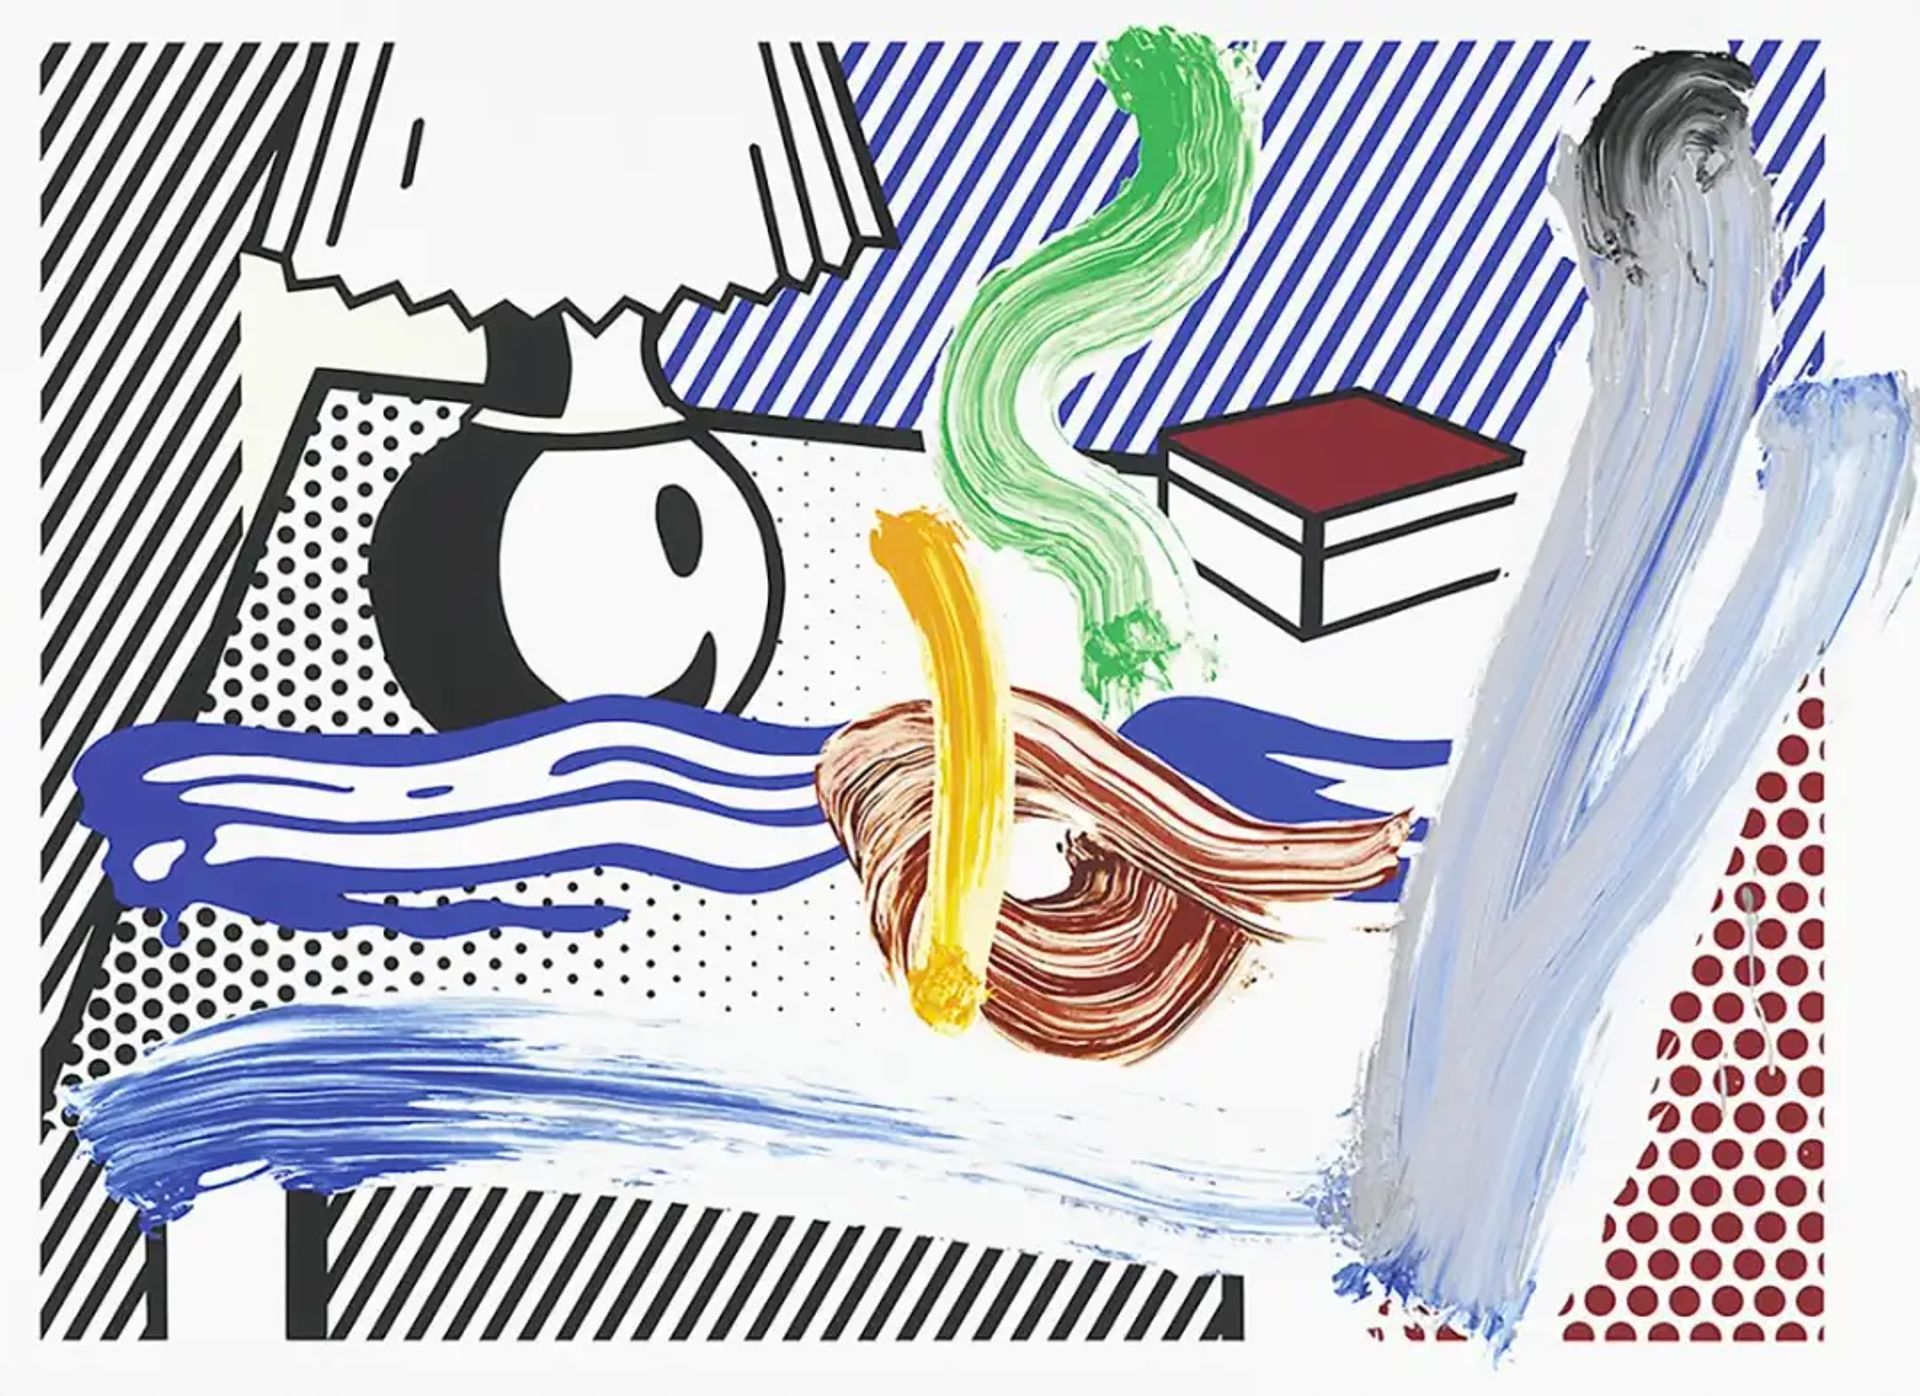 The Pop Art of the Everyday: Roy Lichtenstein's Approach to Still Life